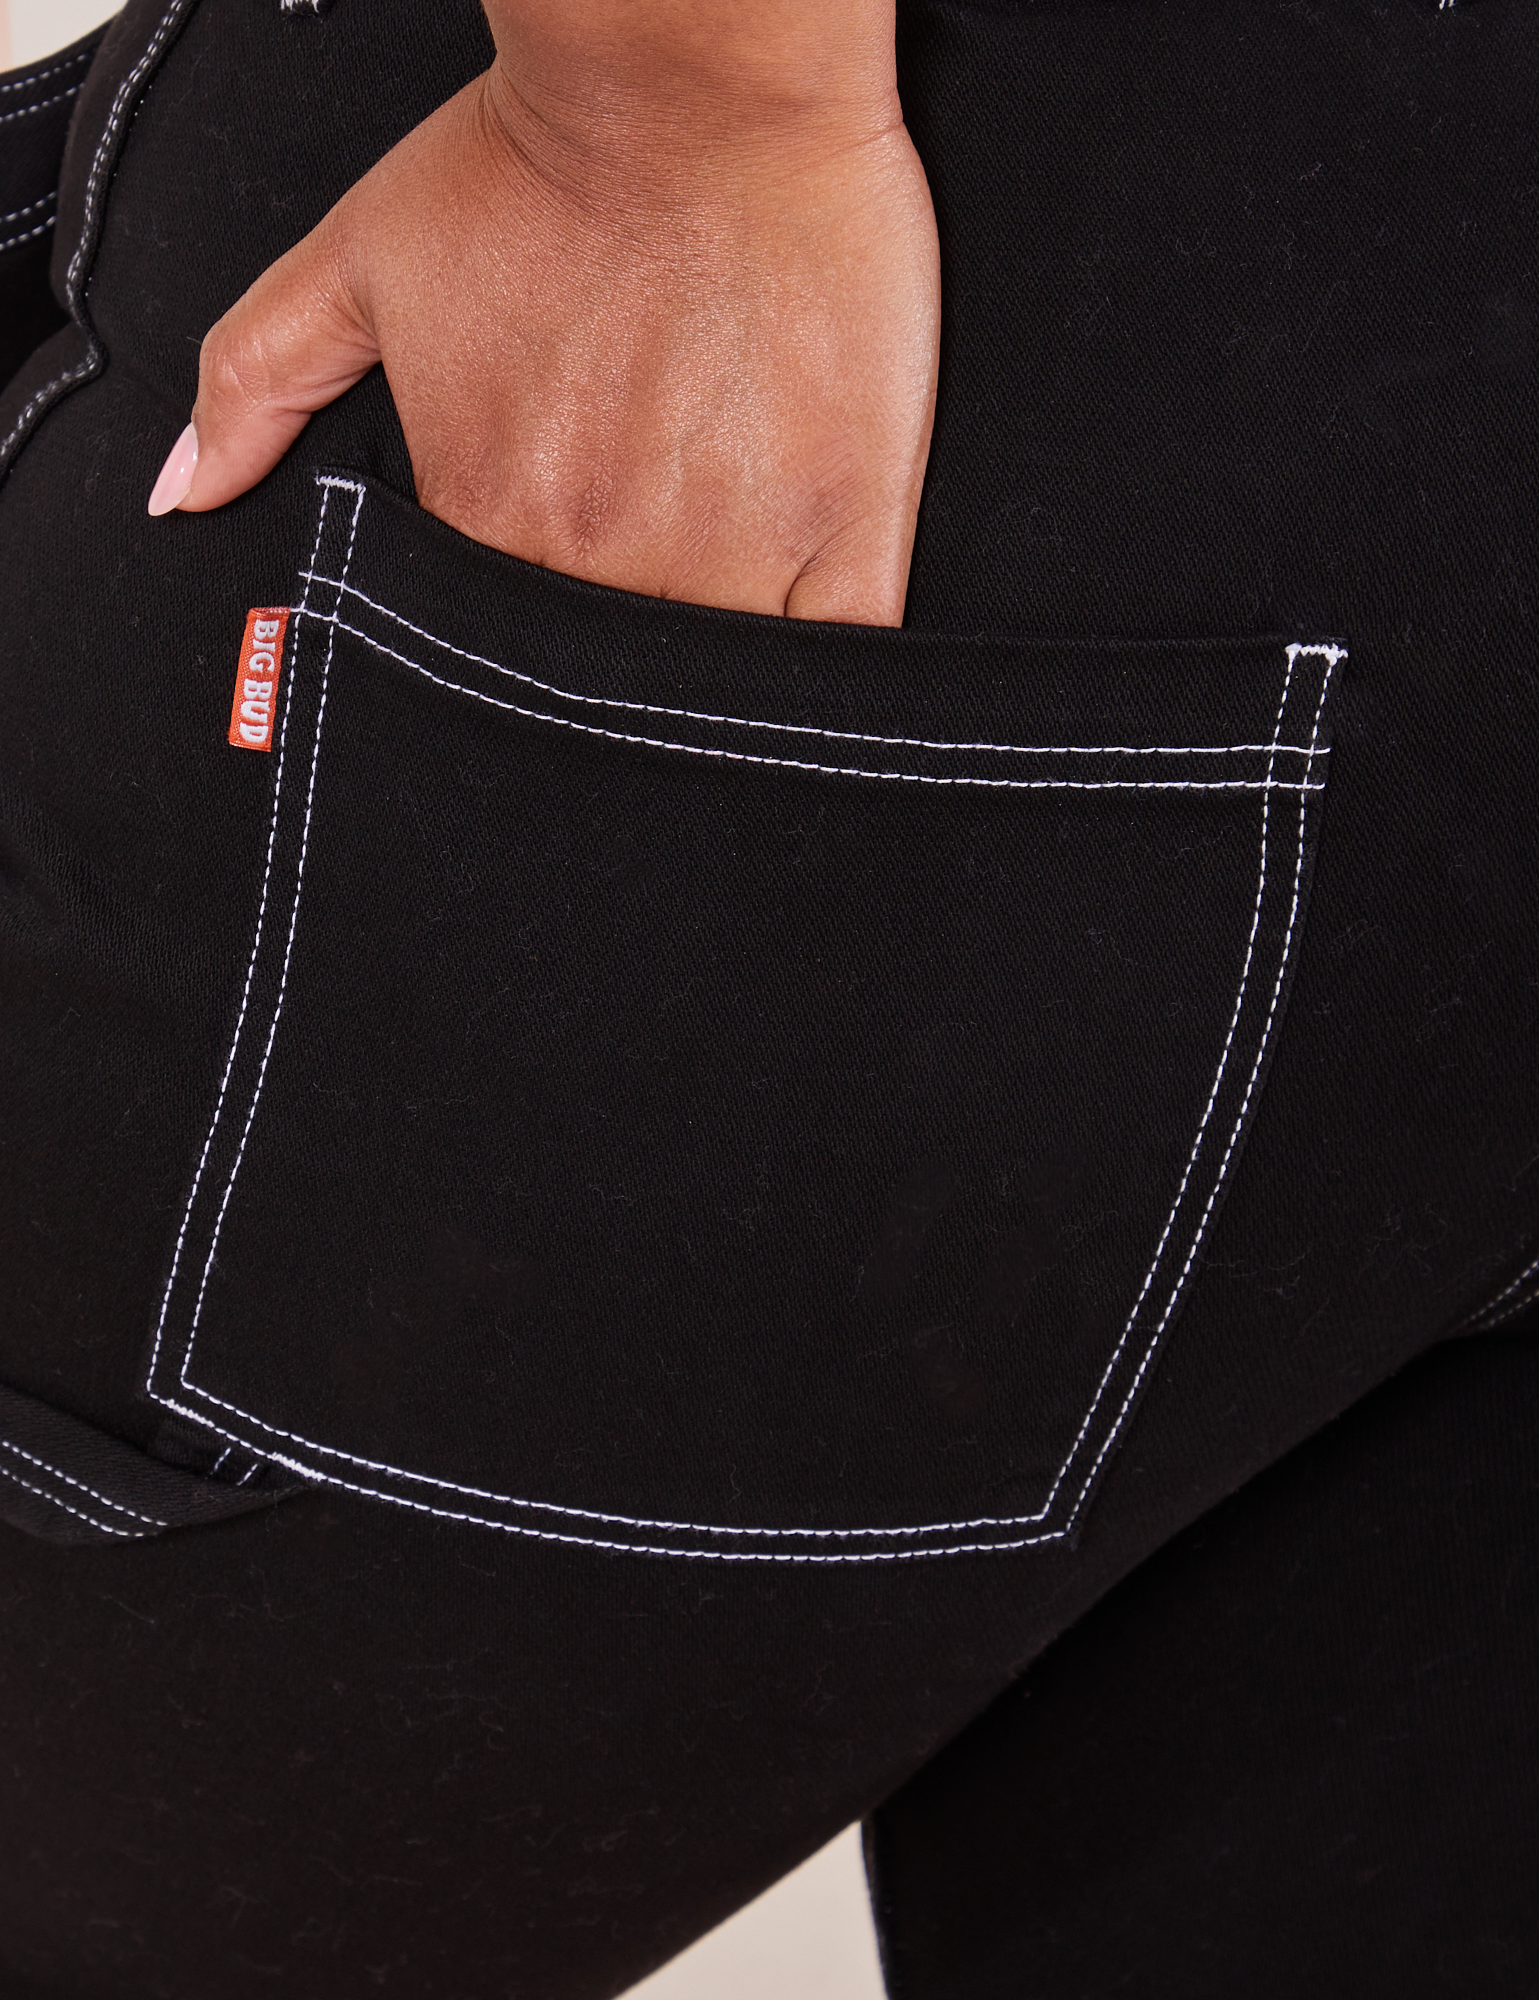 Carpenter Jeans in Black back pocket close up. Morgan has her hand in the pocket.